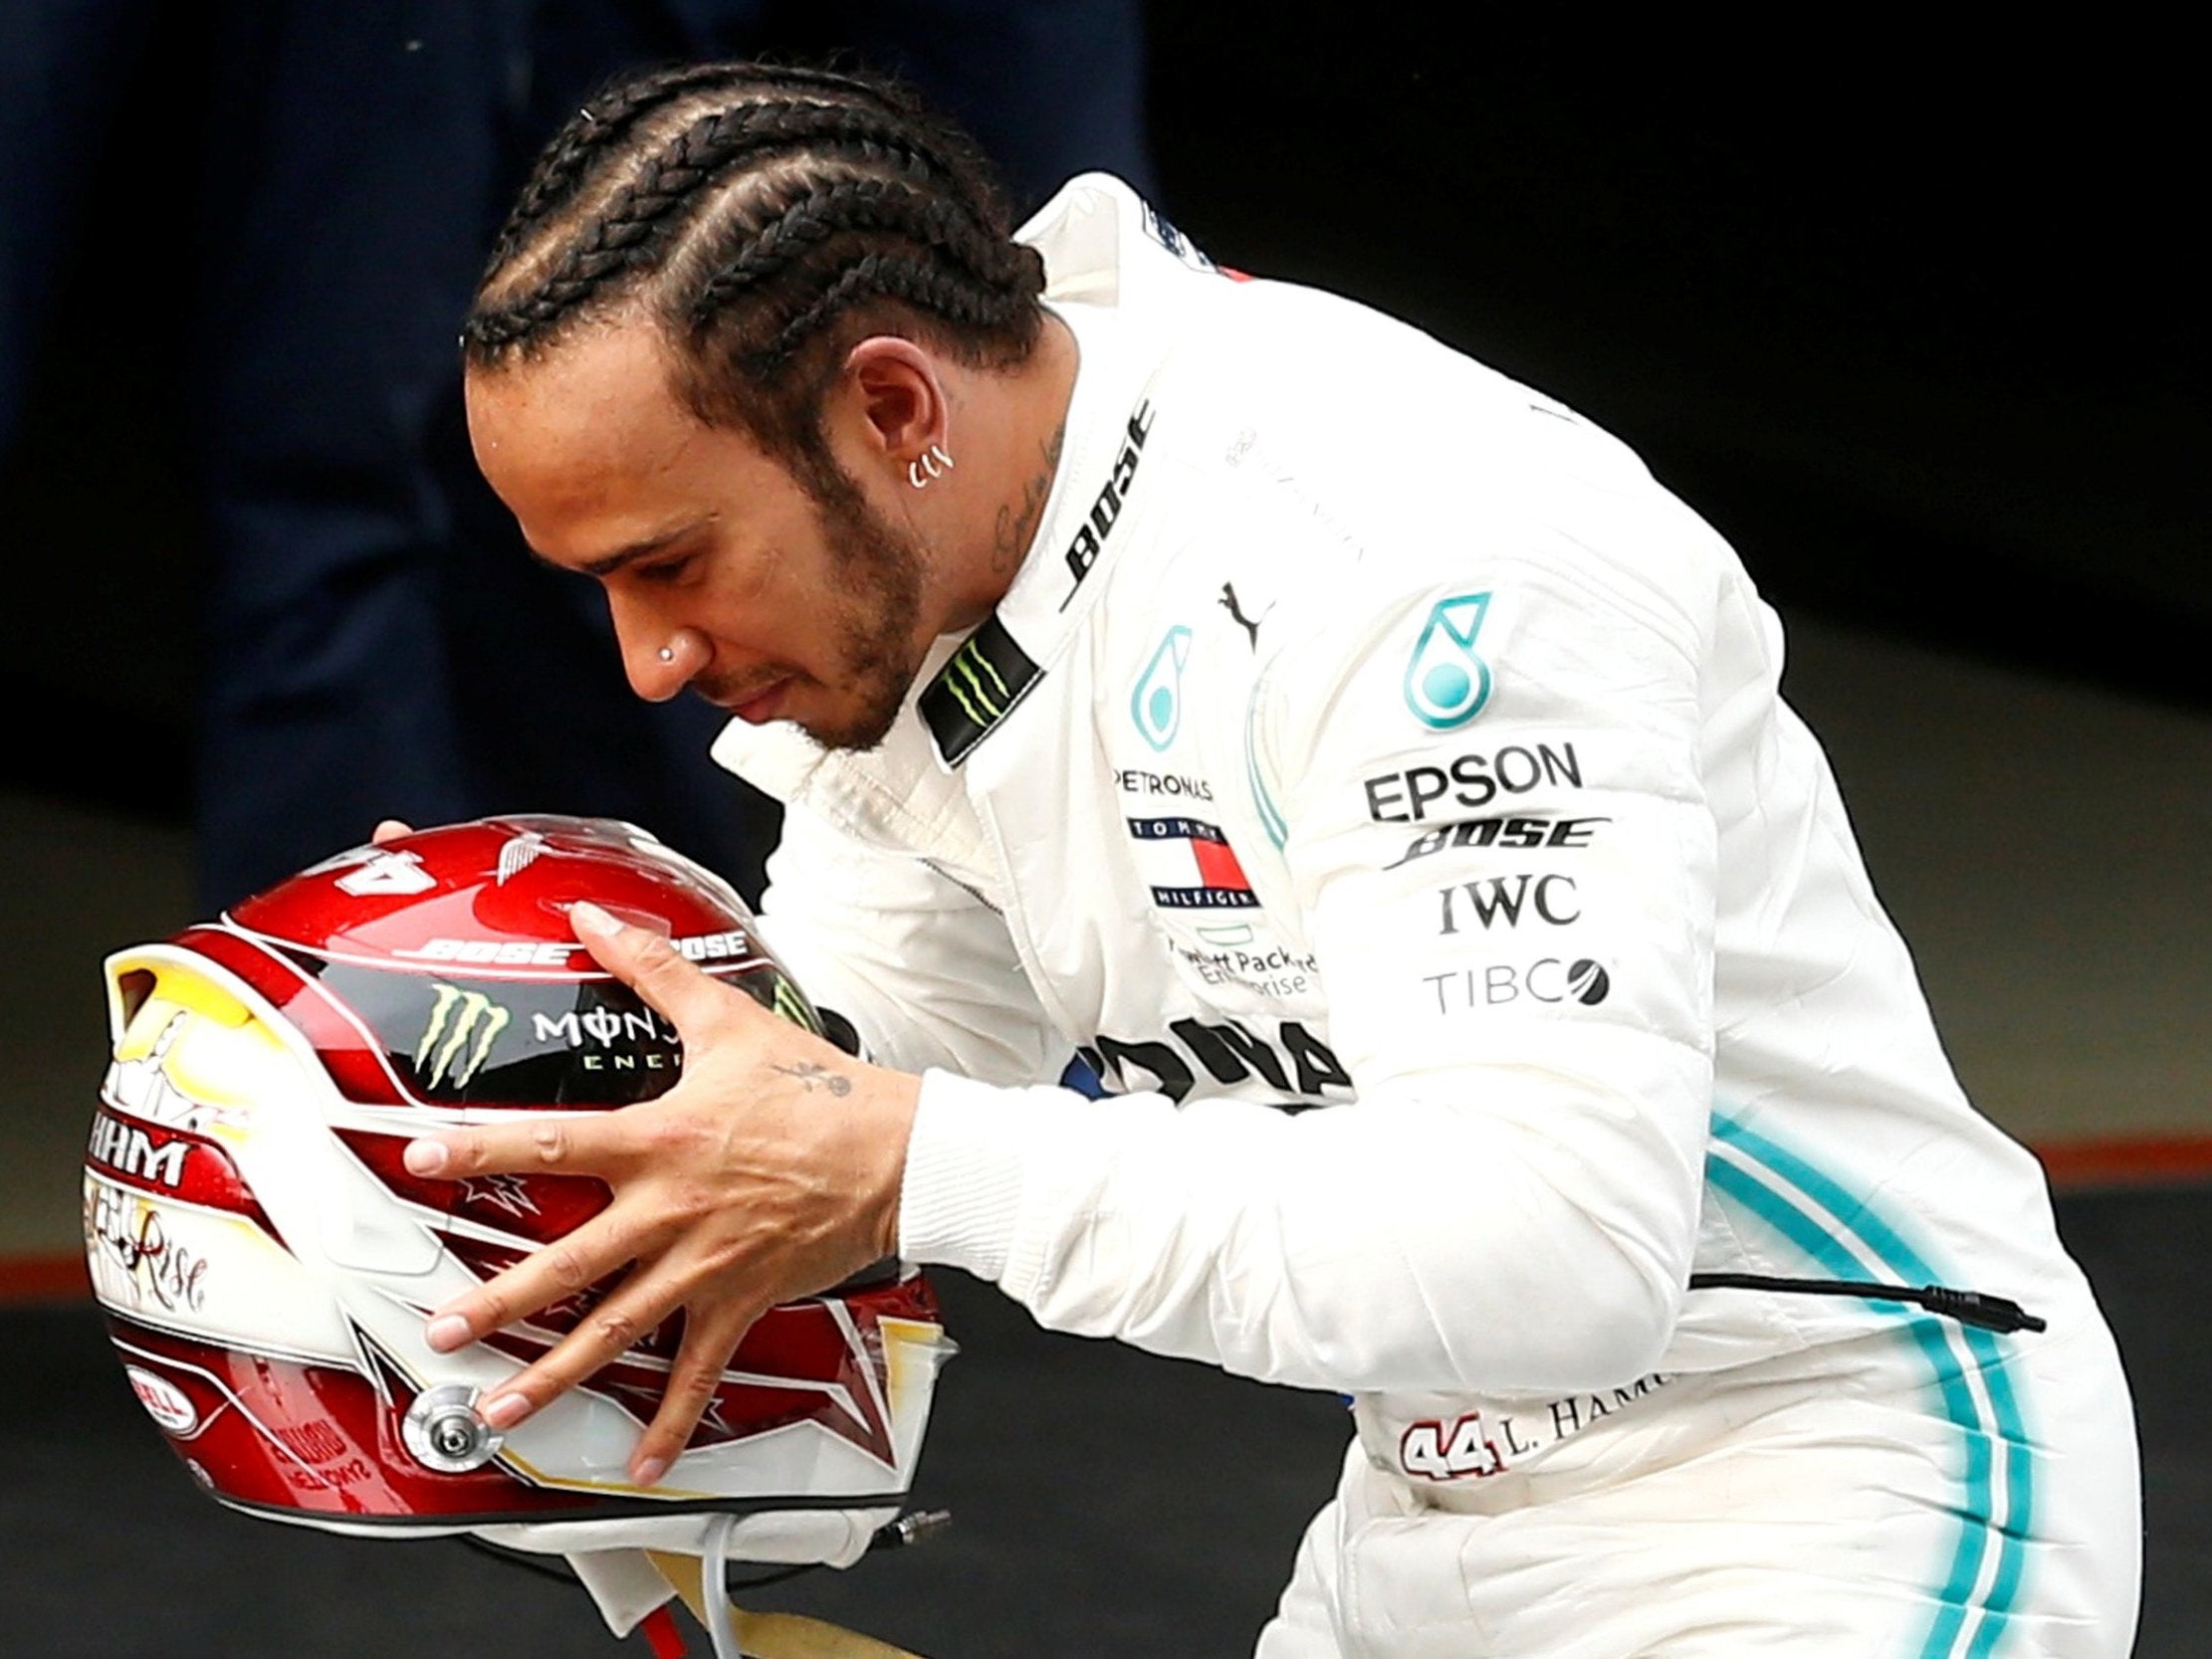 Hamilton kisses his helmet while standing atop his Mercedes